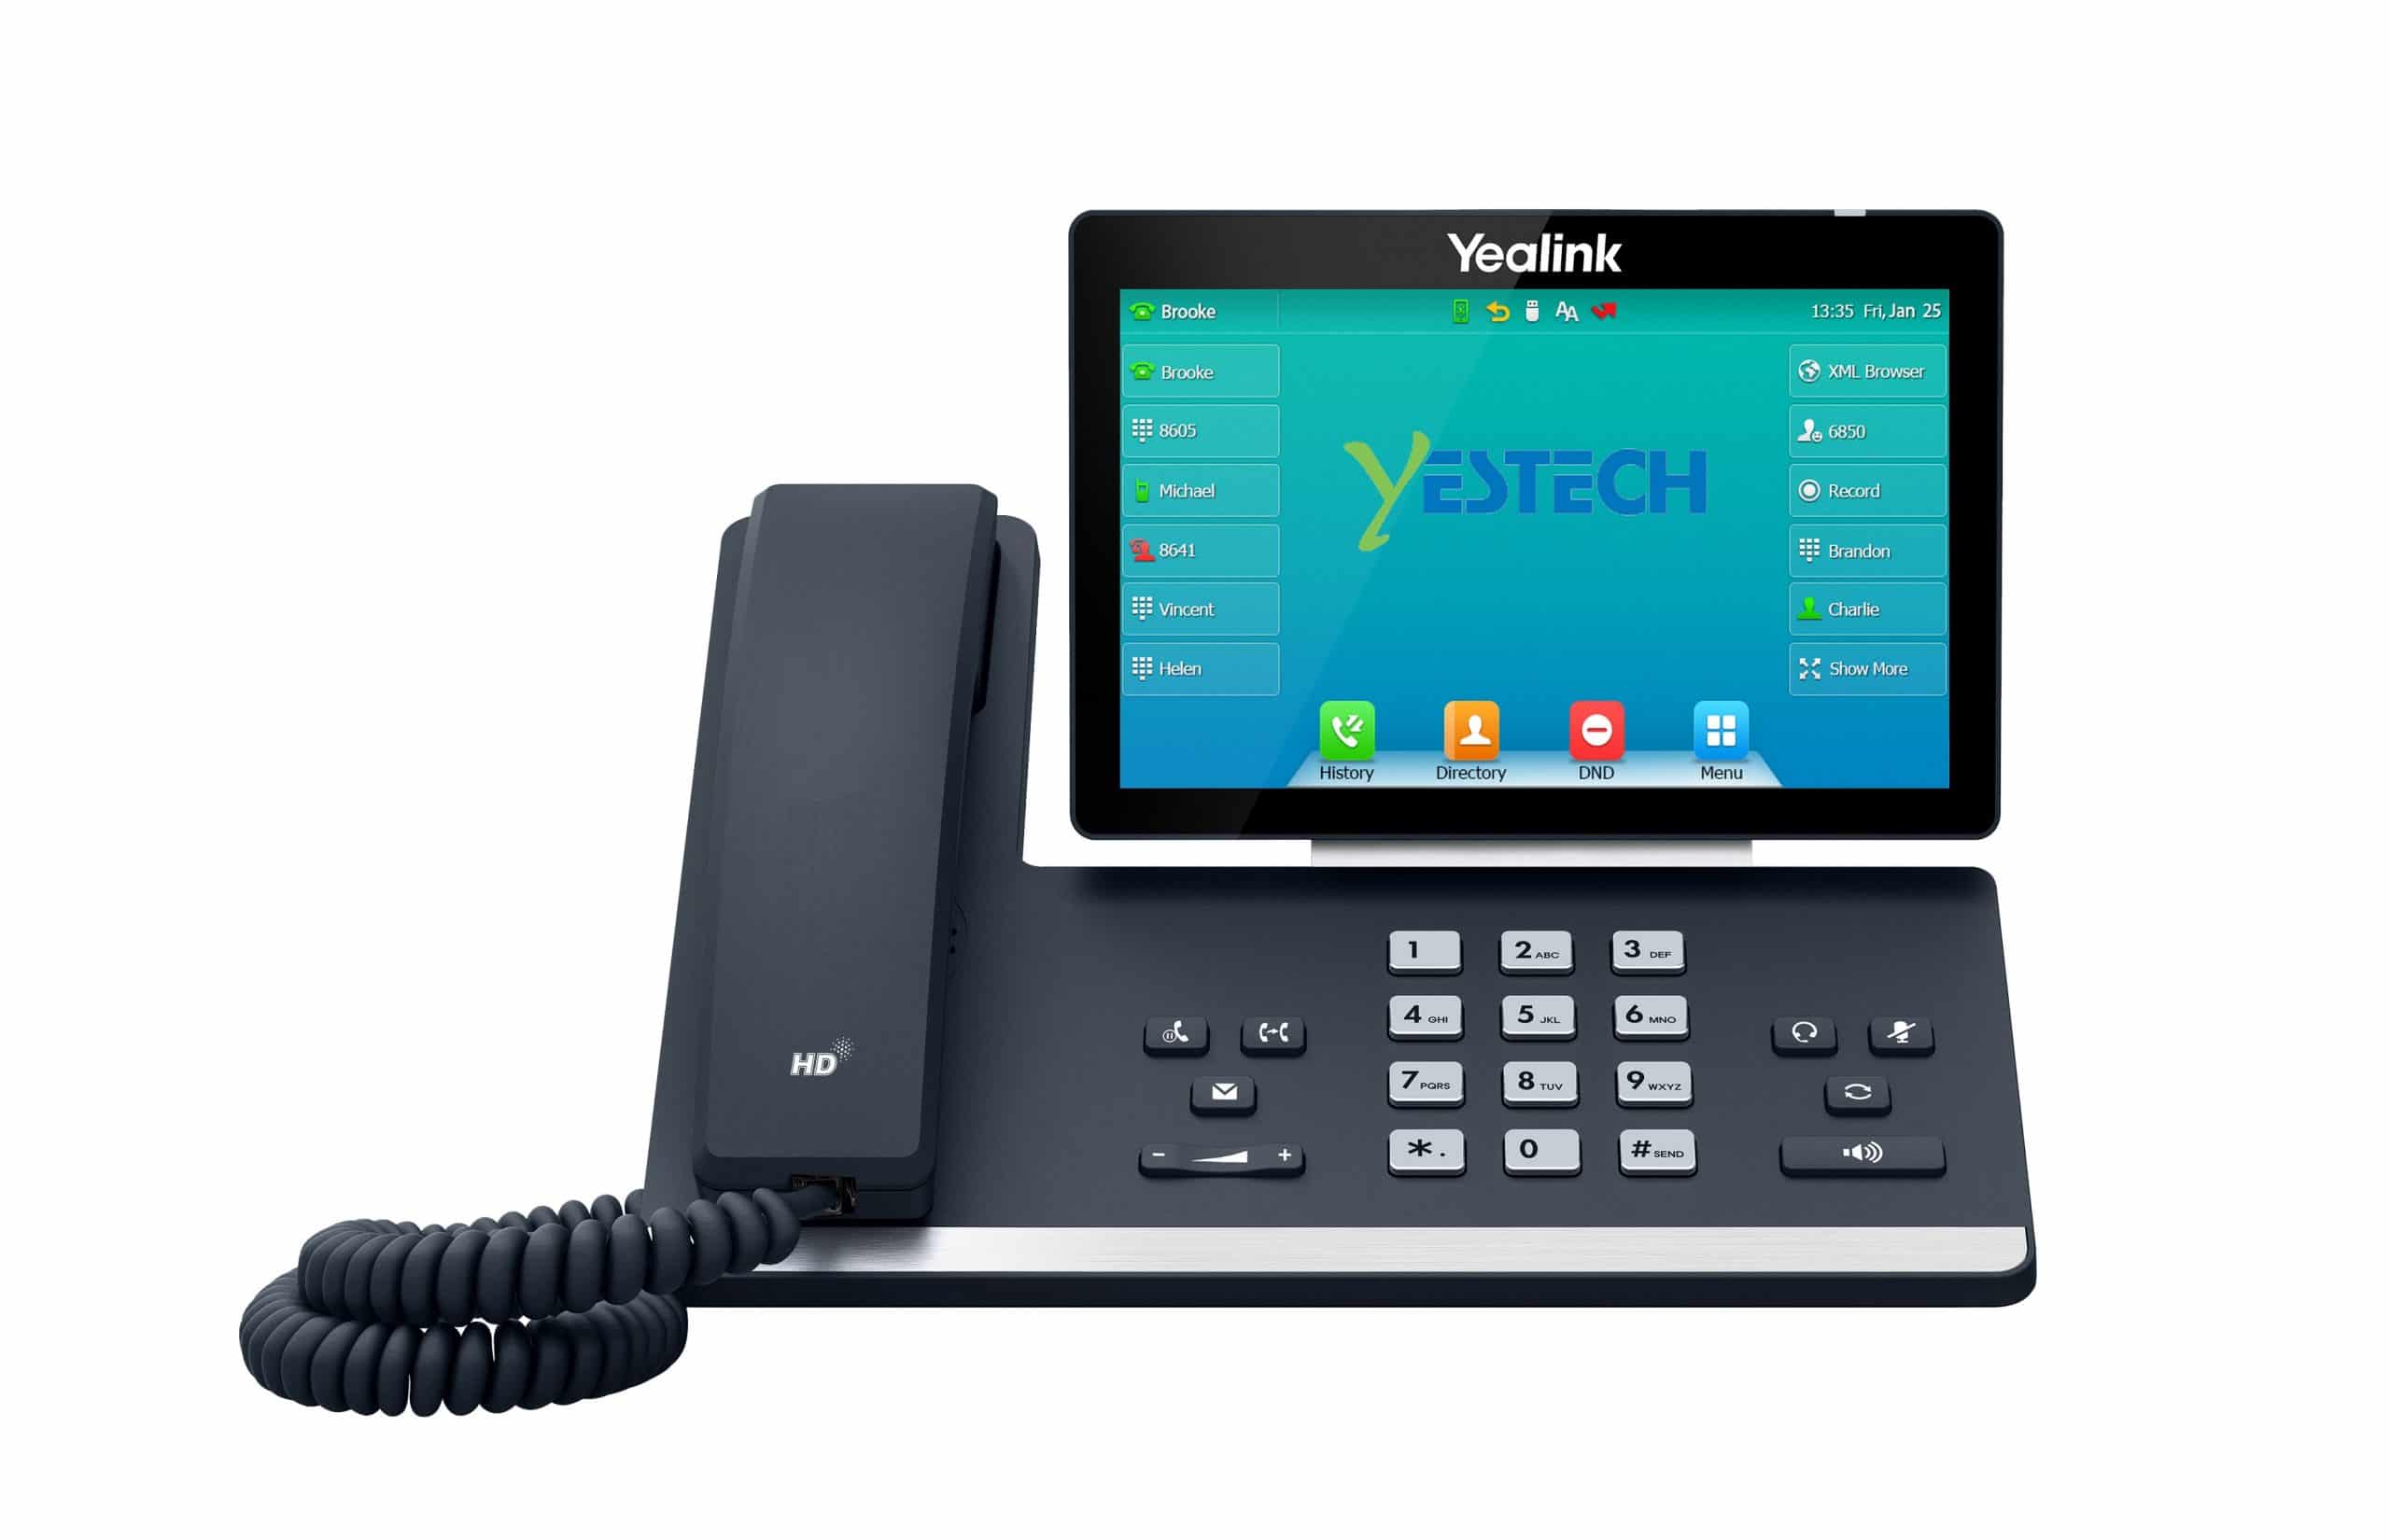 Yestech VoIP phone